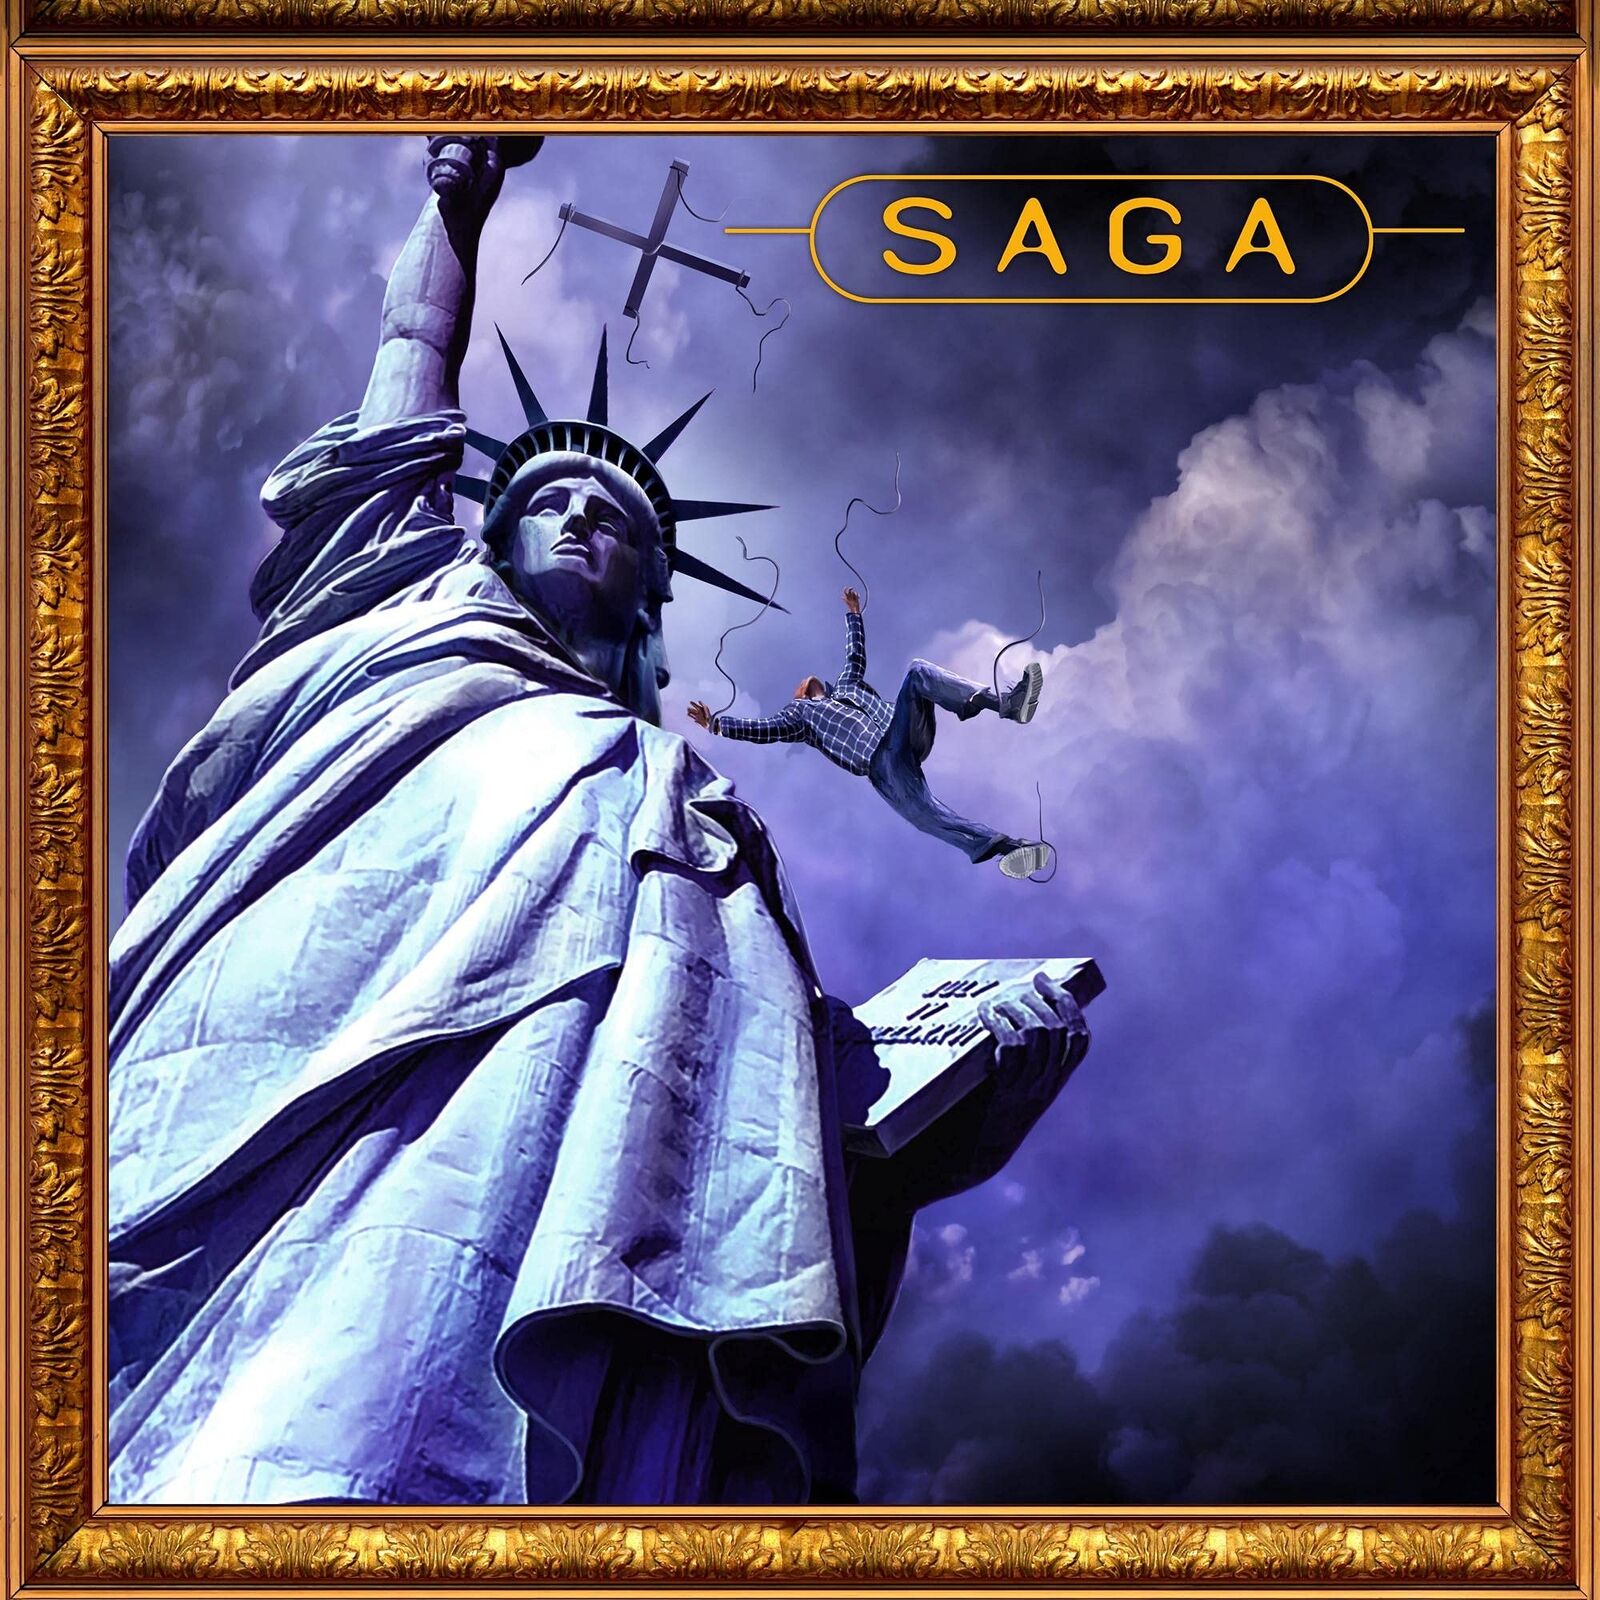 Saga Generation 13 (CD)